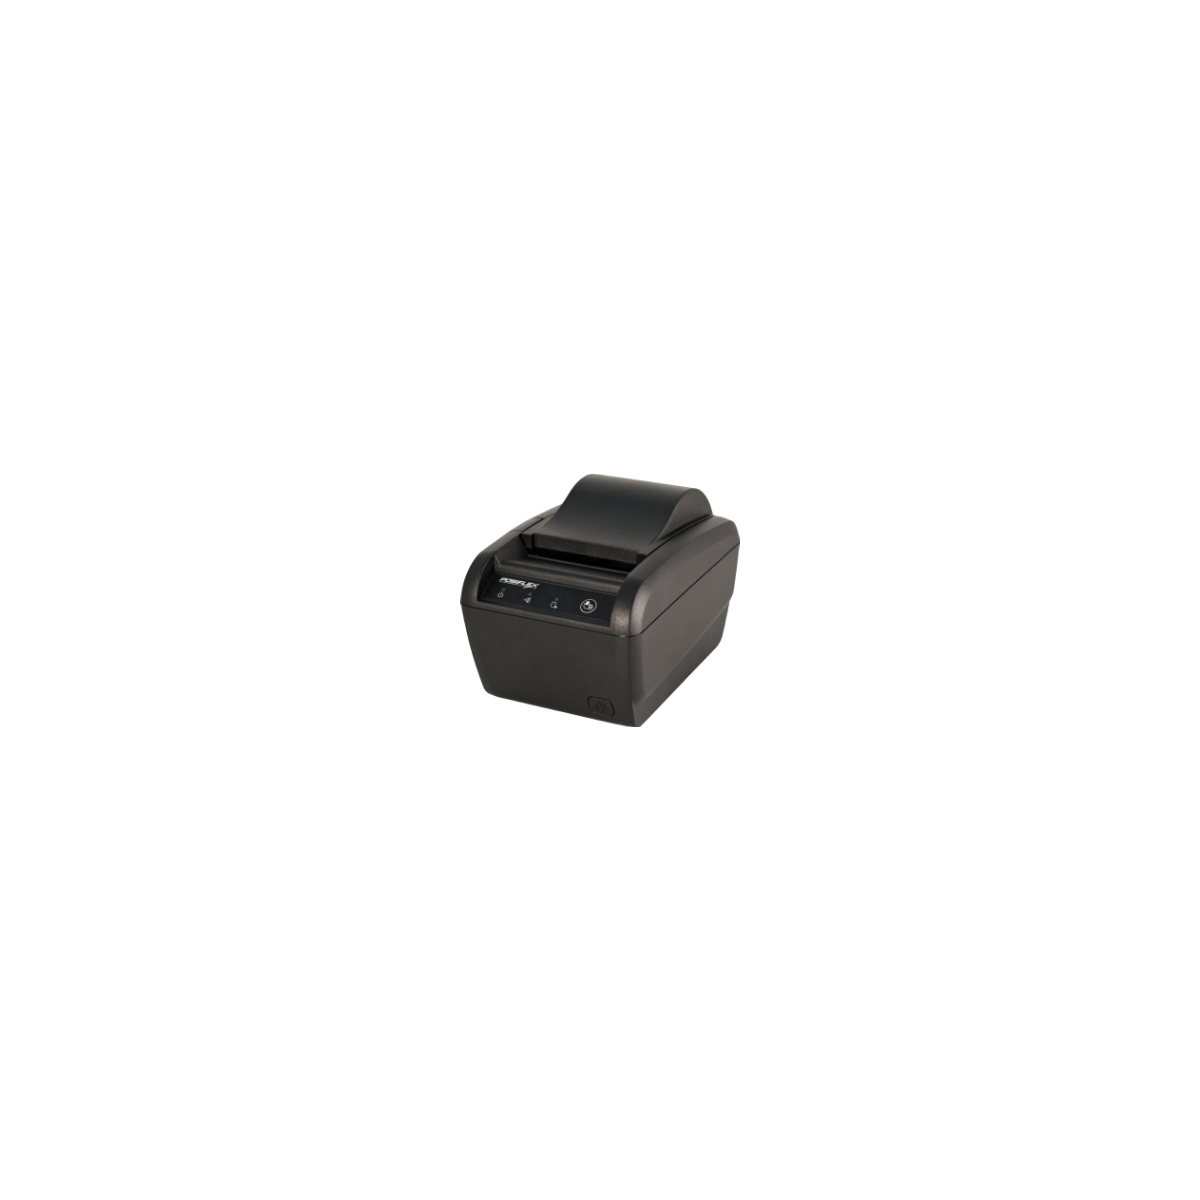 Posiflex PP 880 203 x 203 DPI Alambrico Termica directa Impresora de recibos